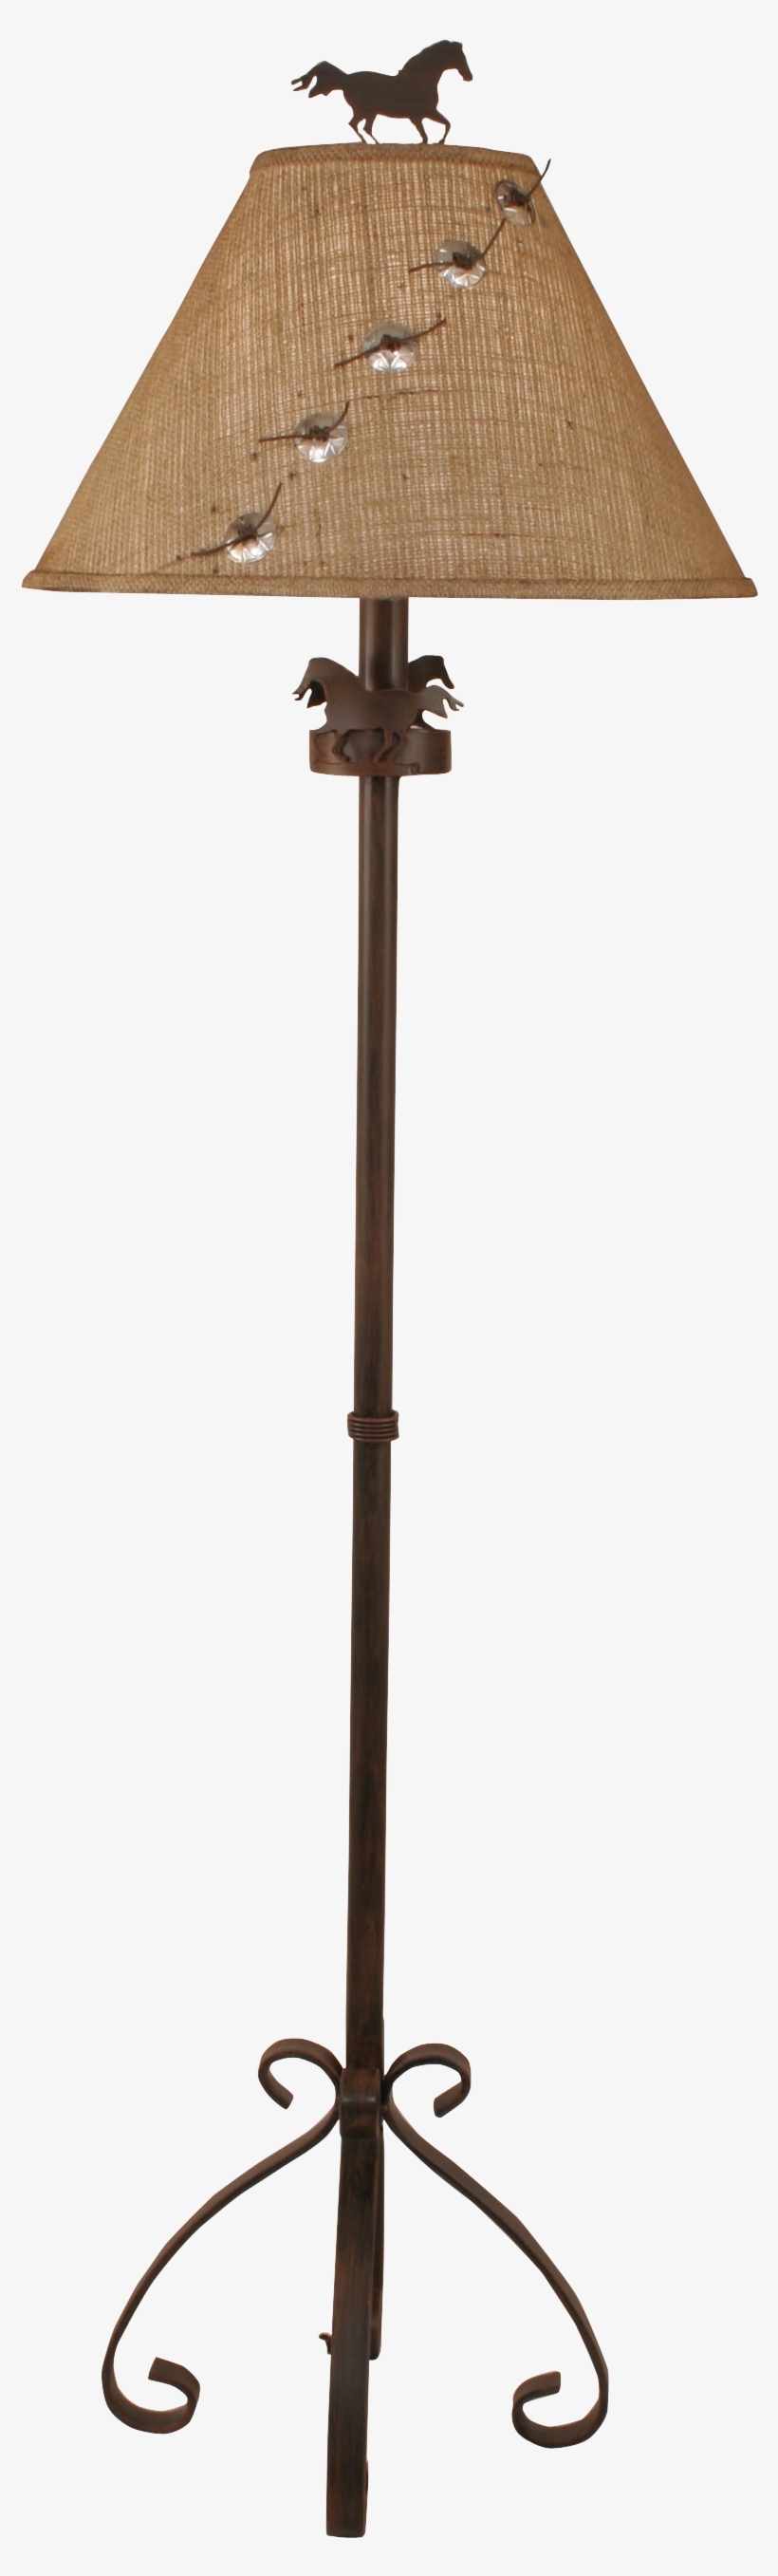 Rust Streak Iron S Leg Floor Lamp W/ Horse Accent - Coast Lamp, Mfg. Rl3128fp Iron S-leg Pine Tree Floor, transparent png #4462871